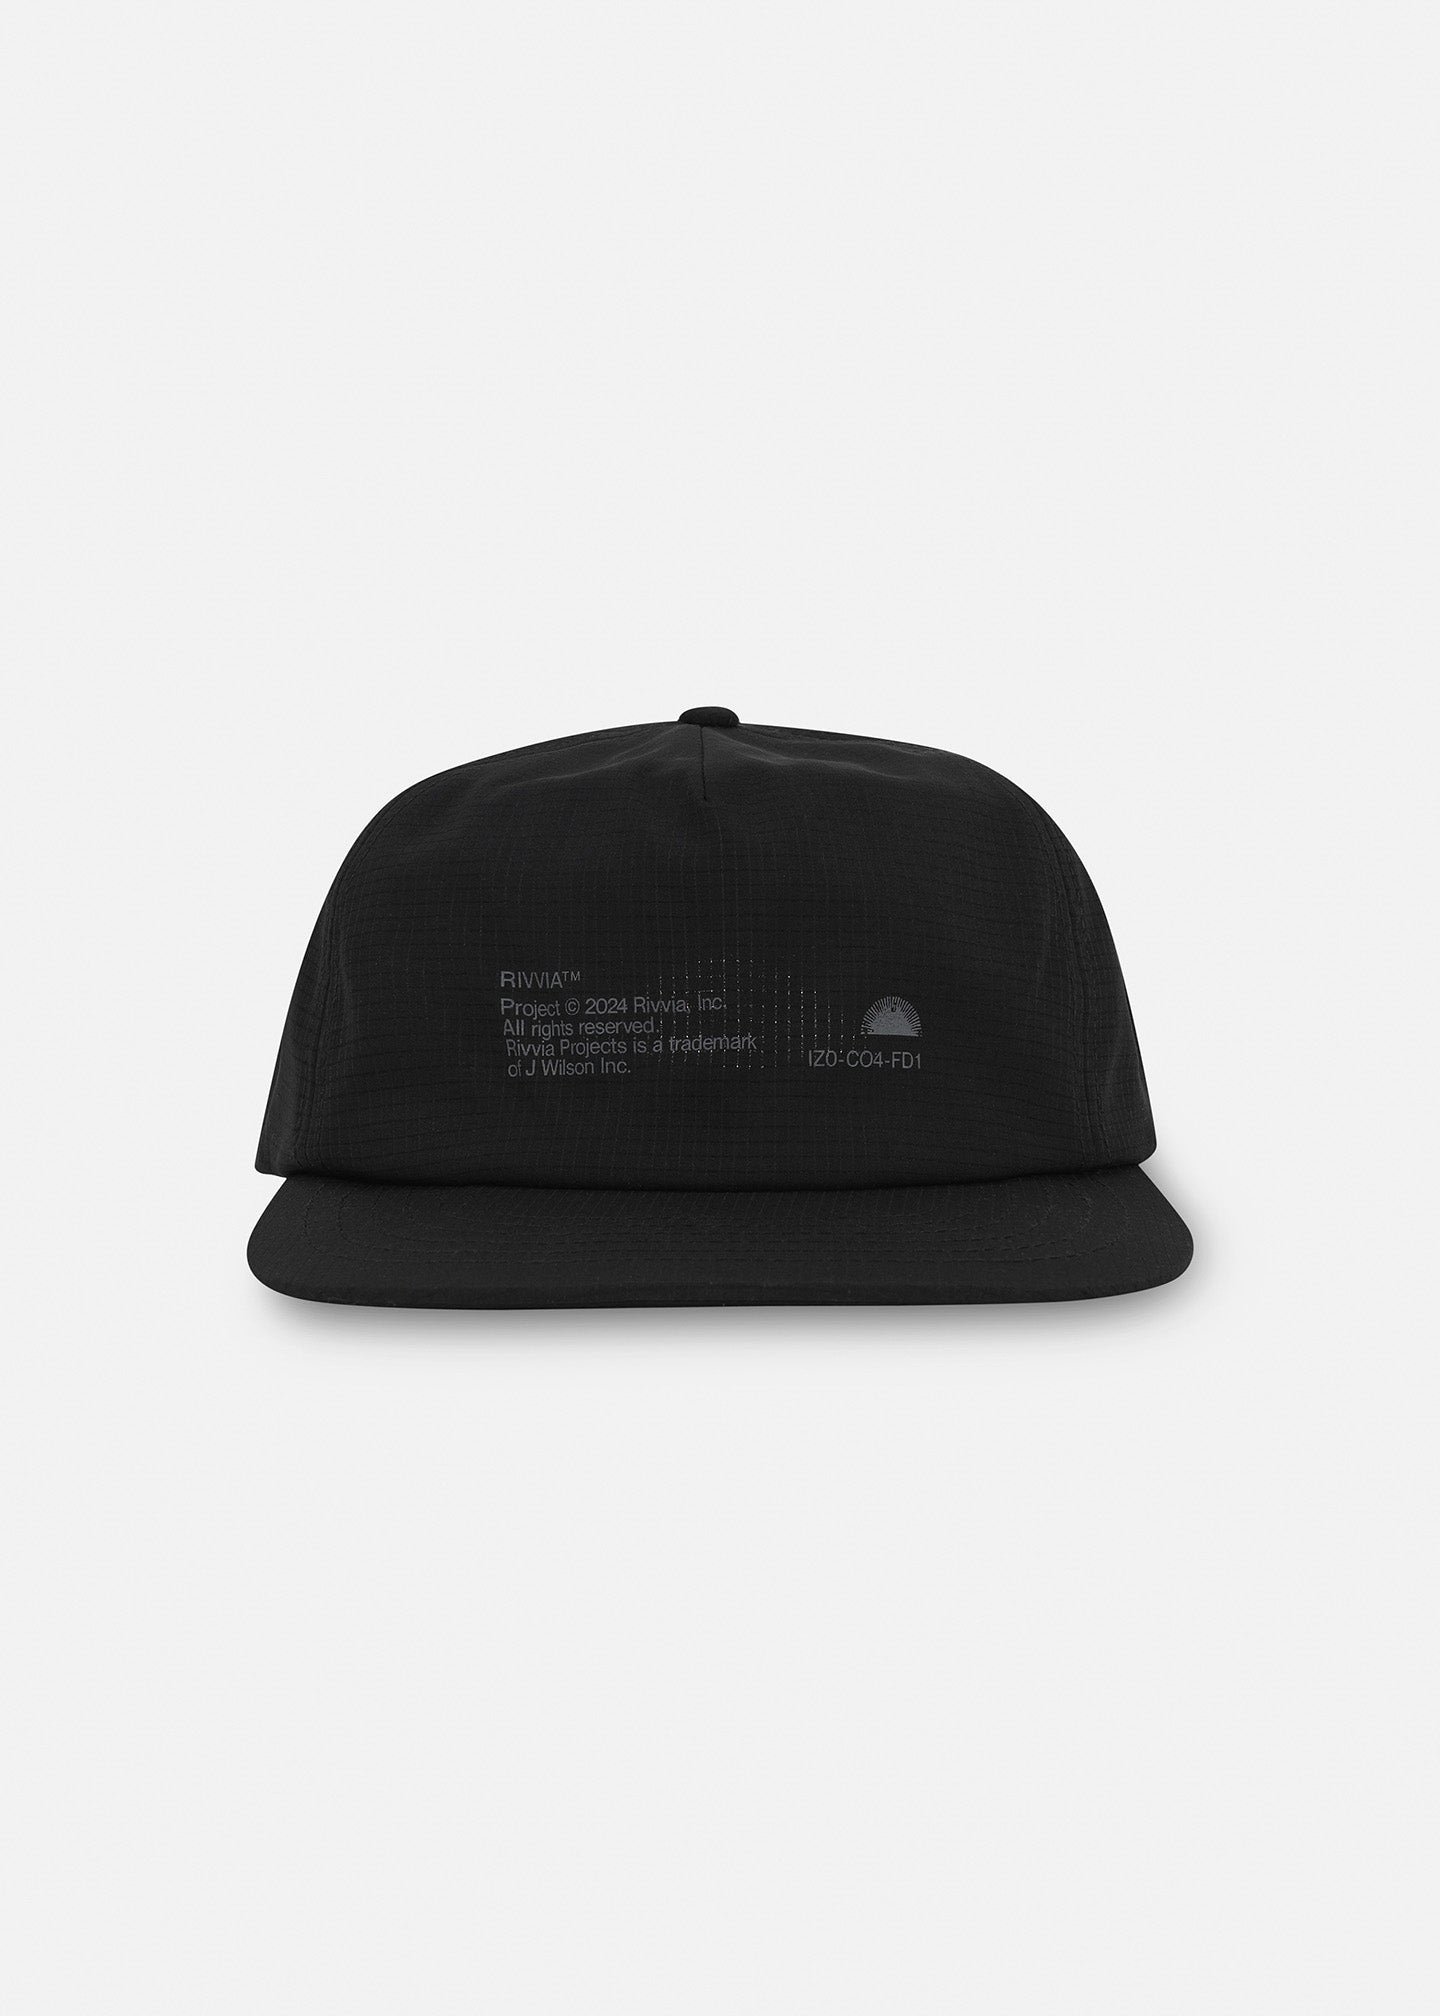 DISCOVERY CAP : BLACK